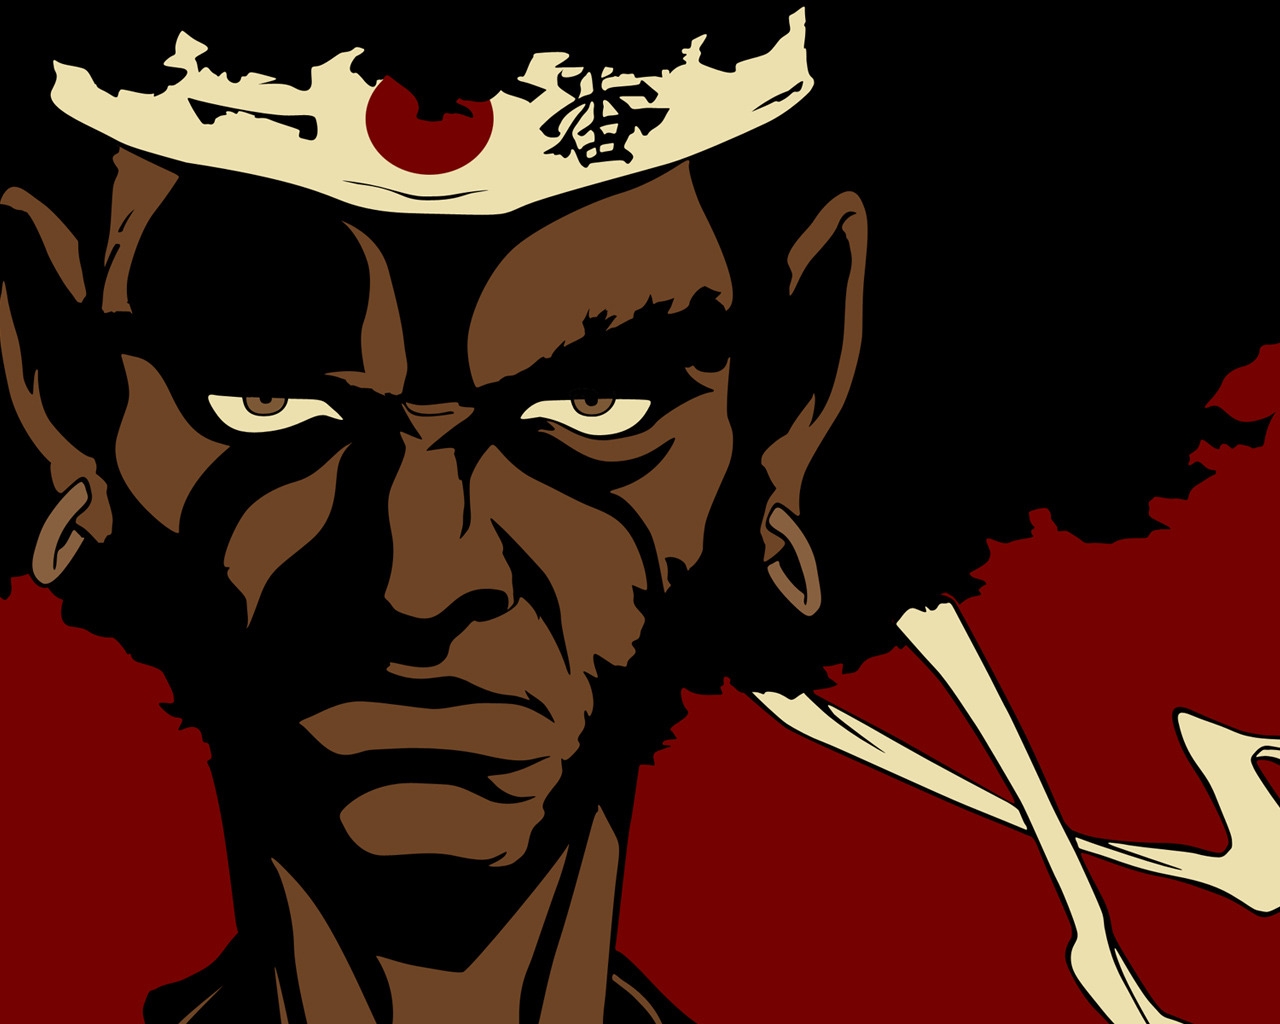 Afro Samurai Face for 1280 x 1024 resolution